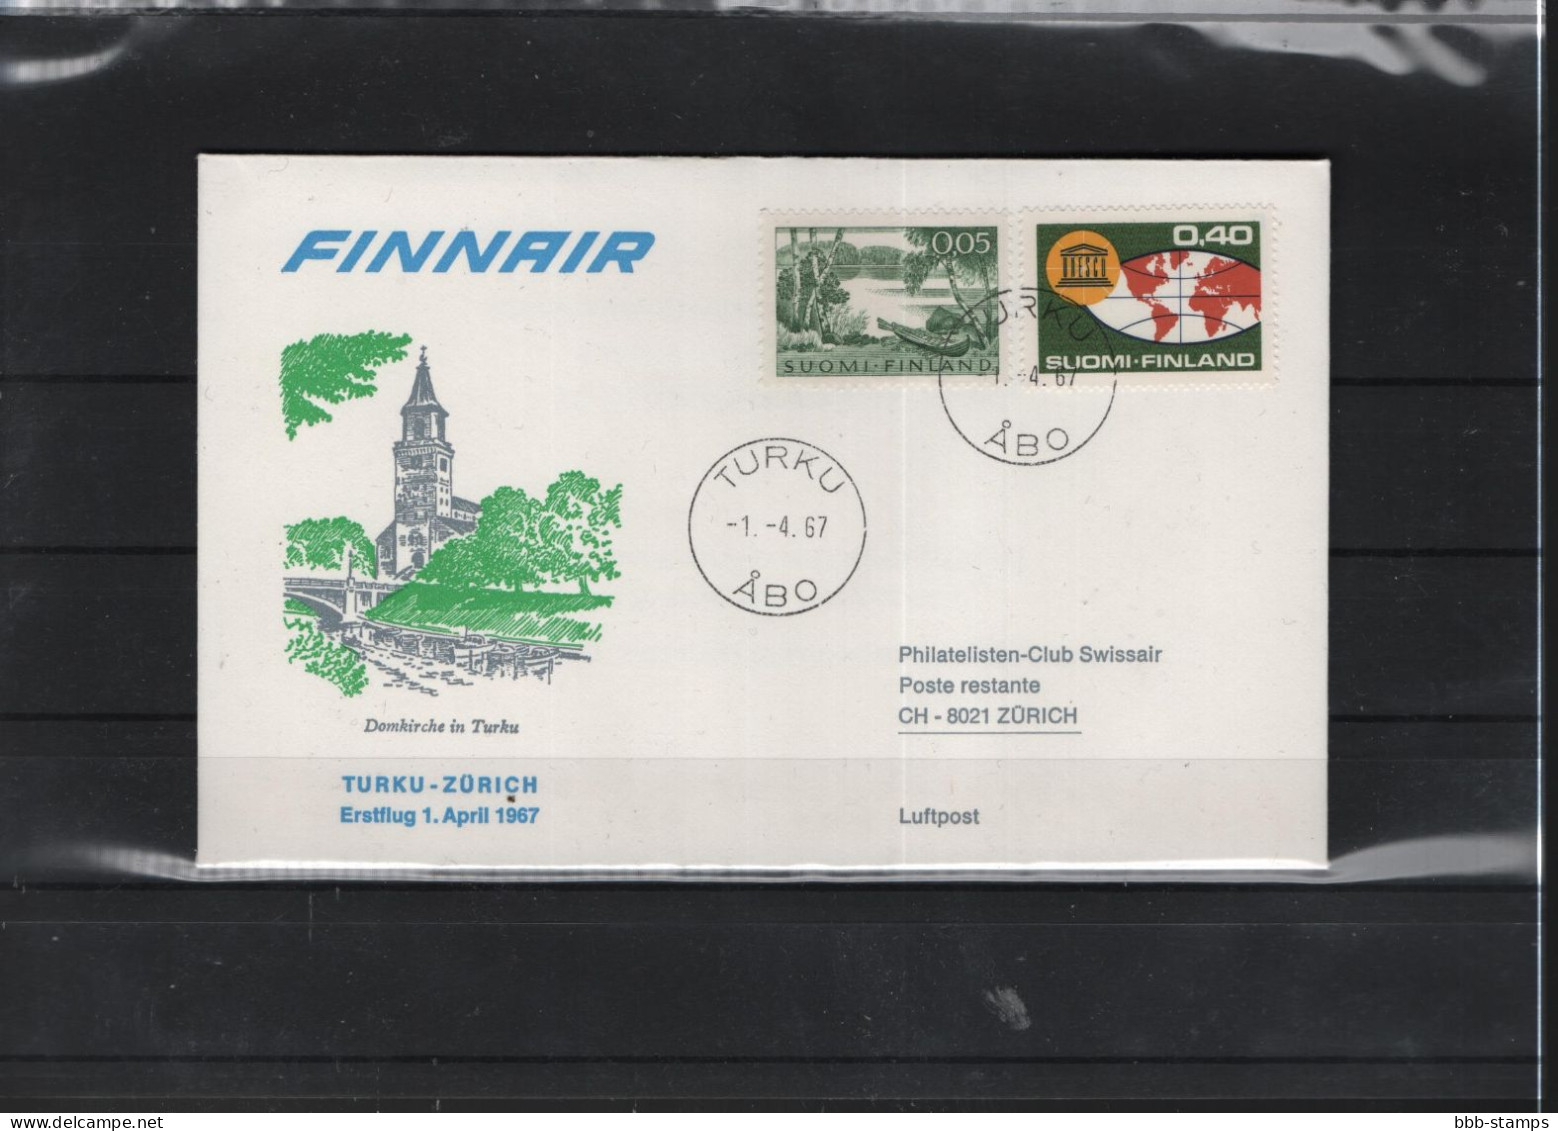 Schweiz Luftpost FFC  Finair 1.4.1967 Turku - Zürich - First Flight Covers